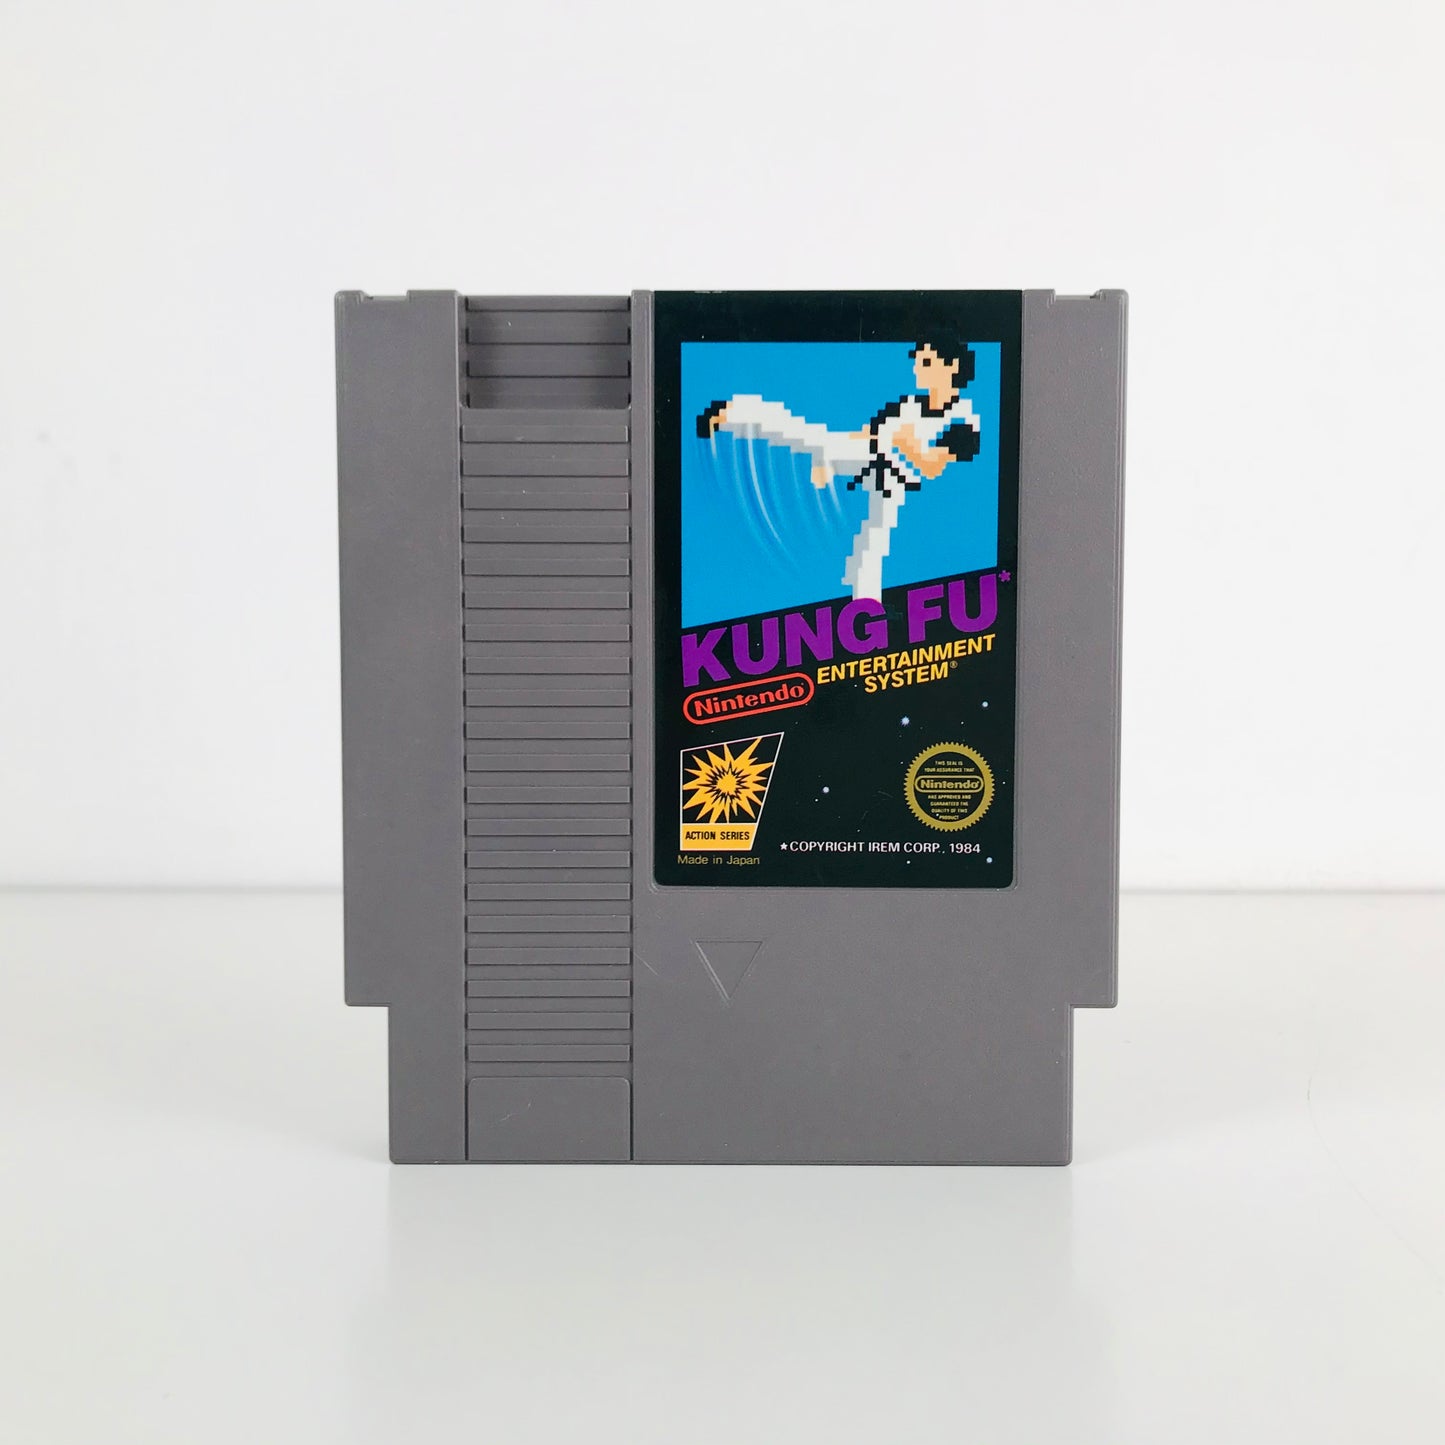 1985 Kung Fu video game cartridge displayed upright